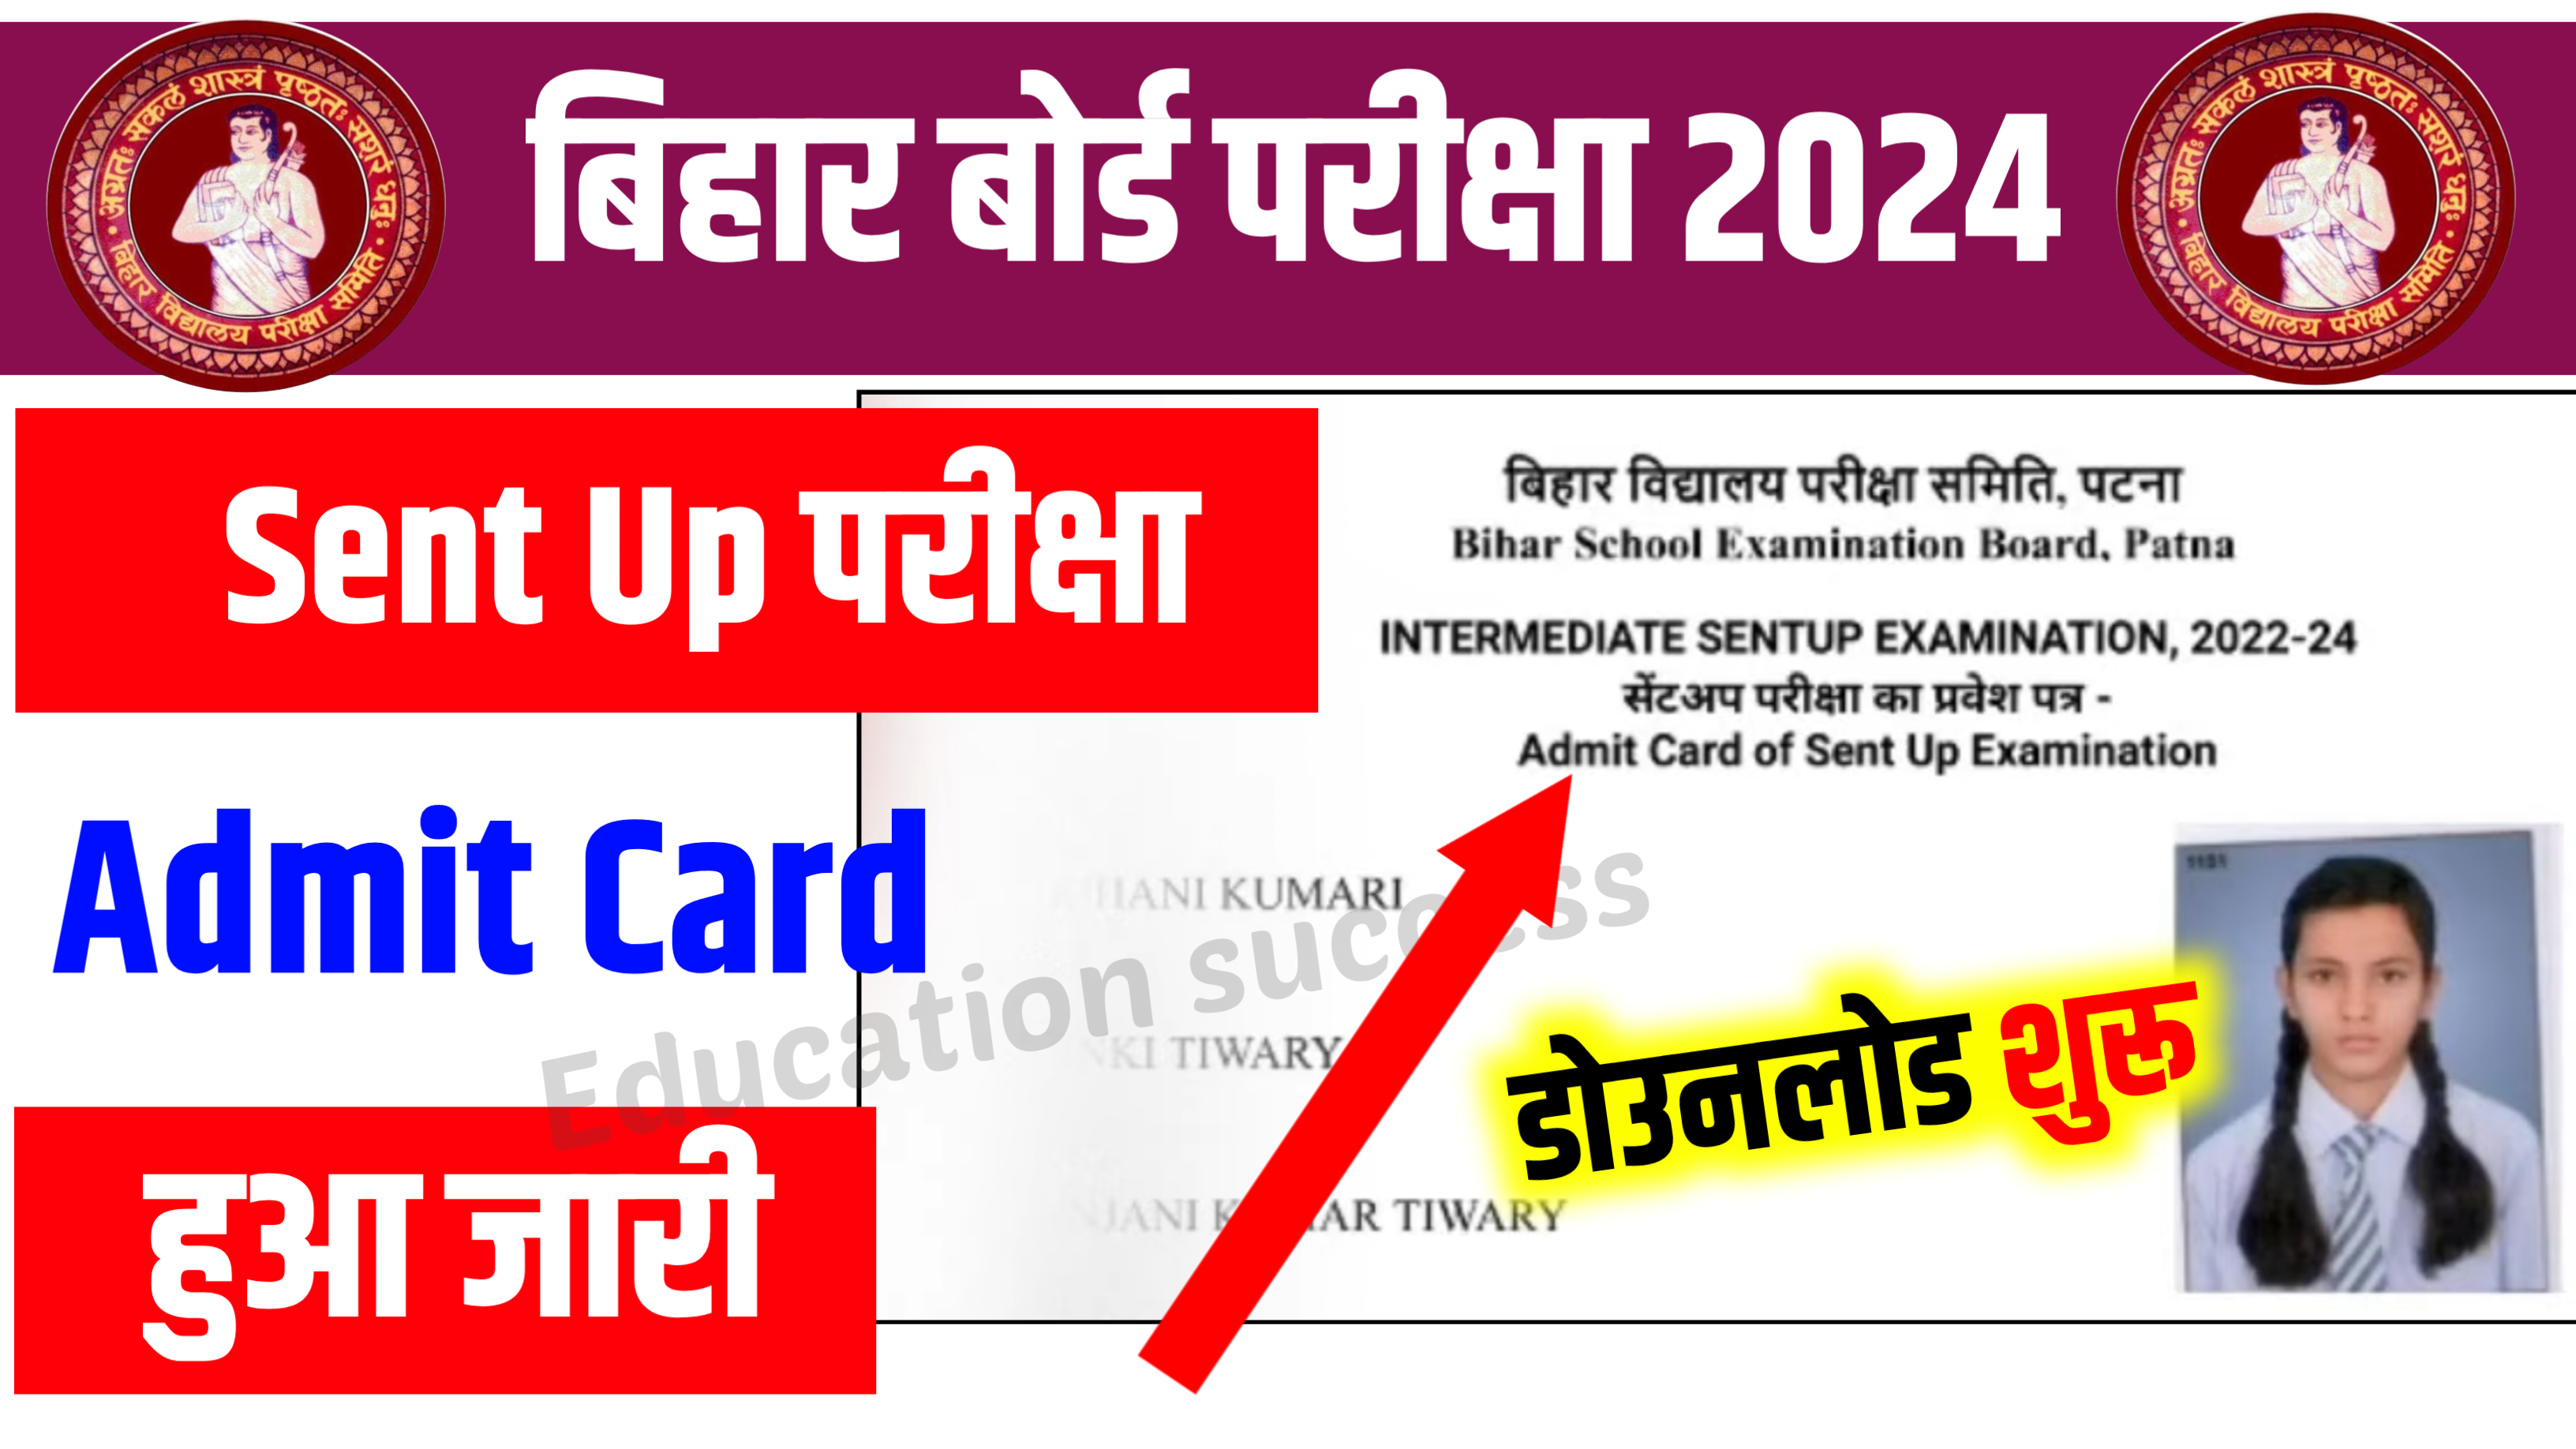 Bihar Board 10th 12th Sent Up Exam Admit Card Out Link Khul gaya: